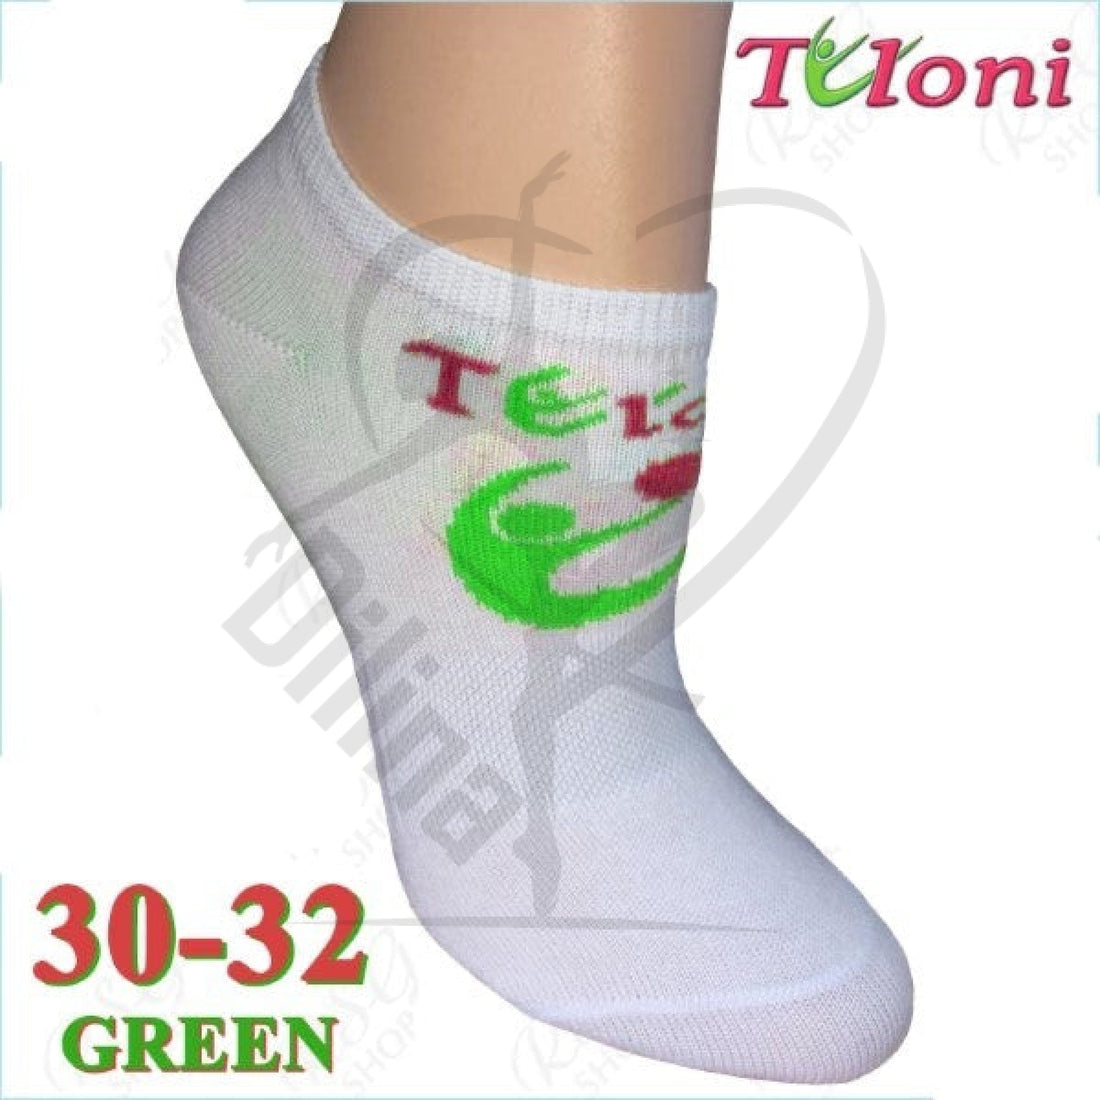 Tuloni Socks Green 30-32 Tights